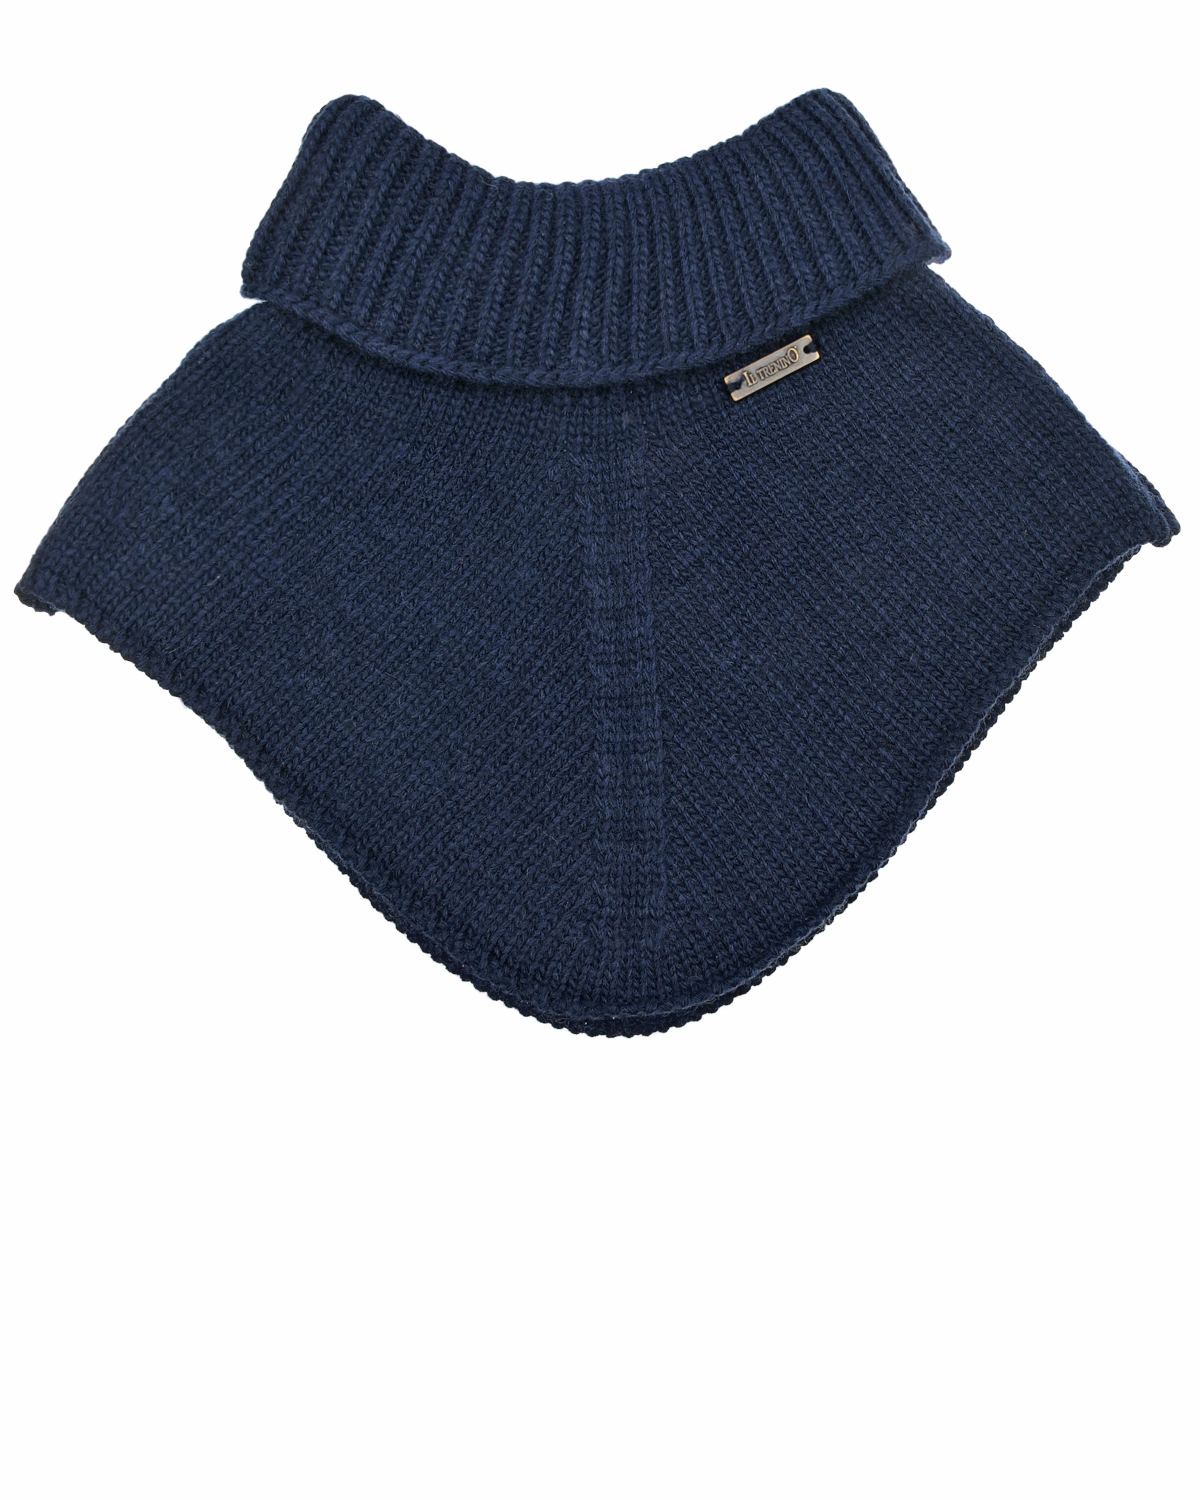 Темно-синий шарф-горло из шерсти и кашемира Il Trenino детское, размер unica - фото 1